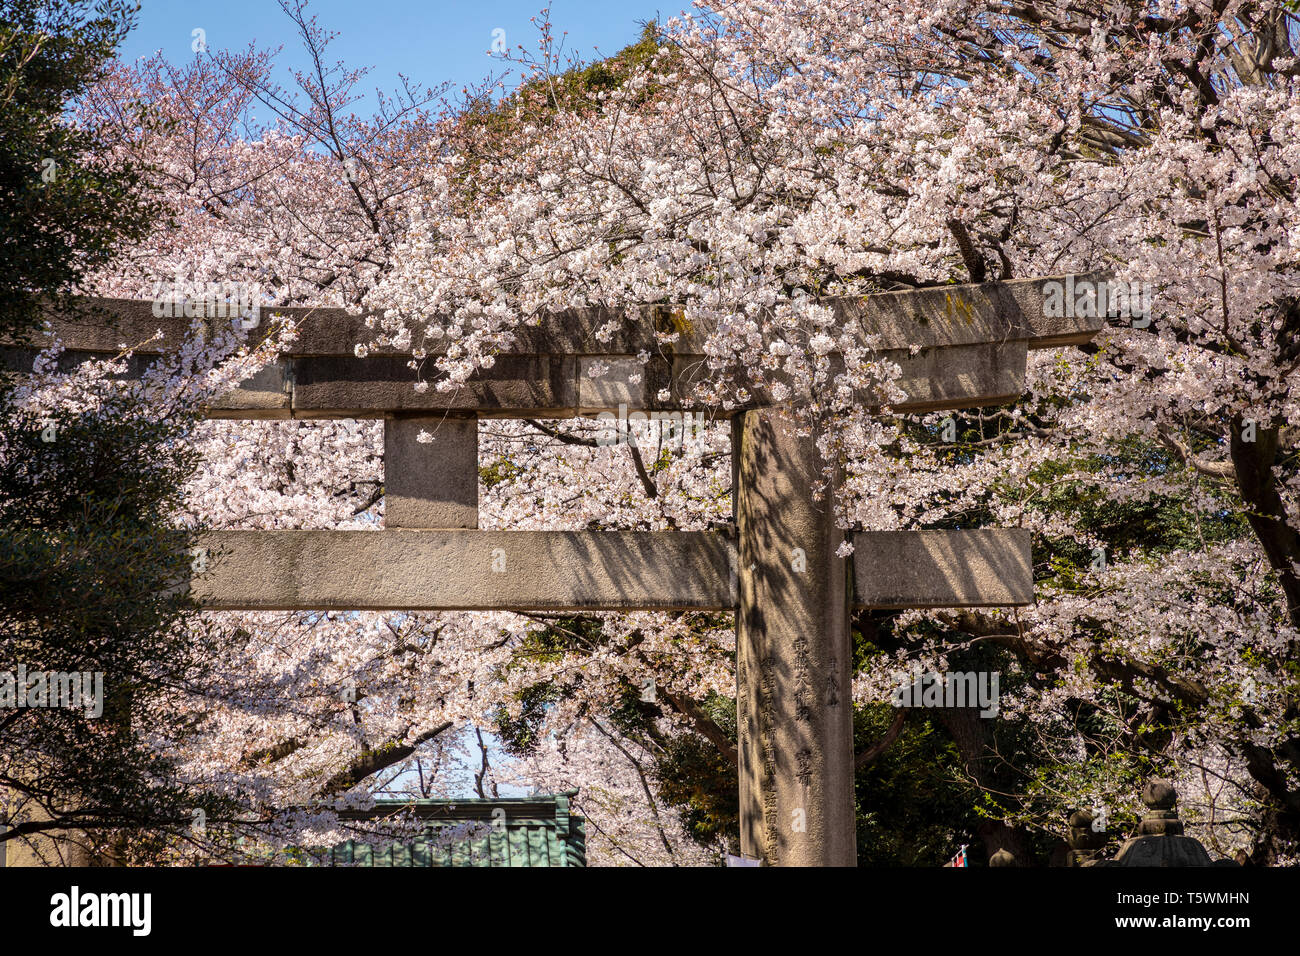 Cherry blossom on Shinto Shrine, Ueno Park, Tokyo, Japan. Stock Photo